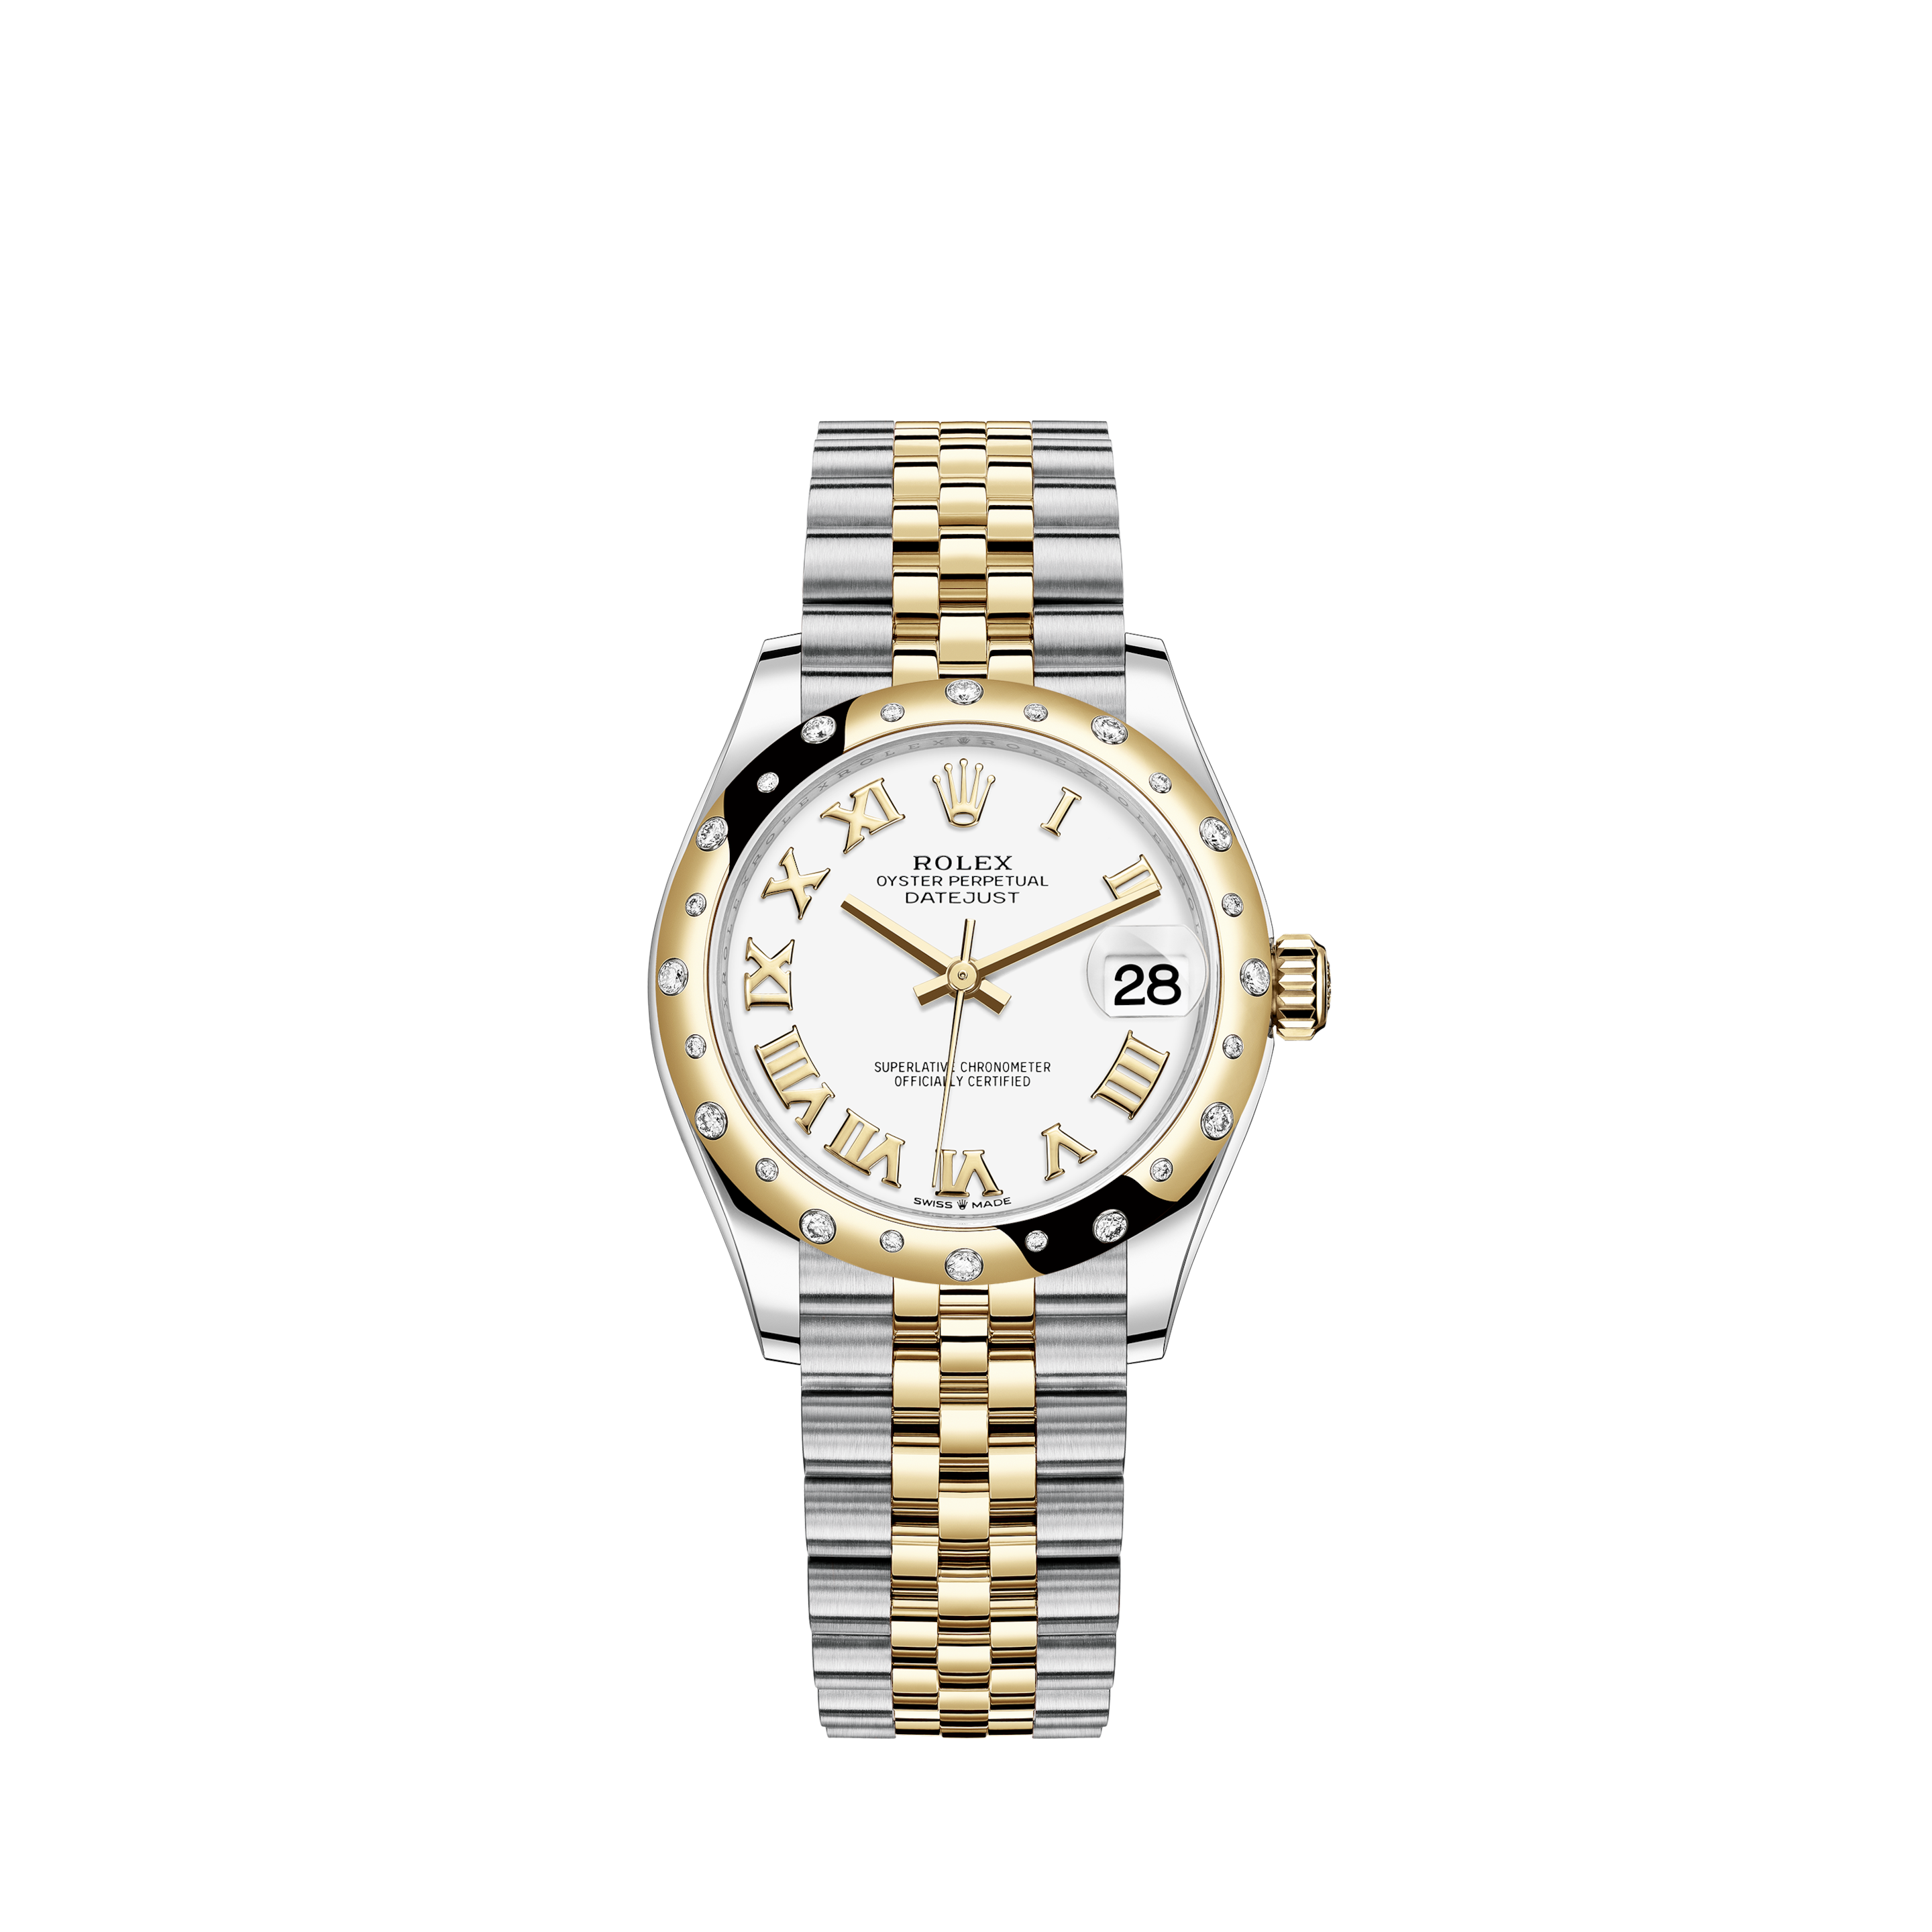 Rolex Datejust 41 18k Gold/Steel Champagne Index Dial Watch 126333 -2019 CardRolex Datejust 41 18k Gold/Steel Silver Index Dial Watch 126333 Mint-W Card